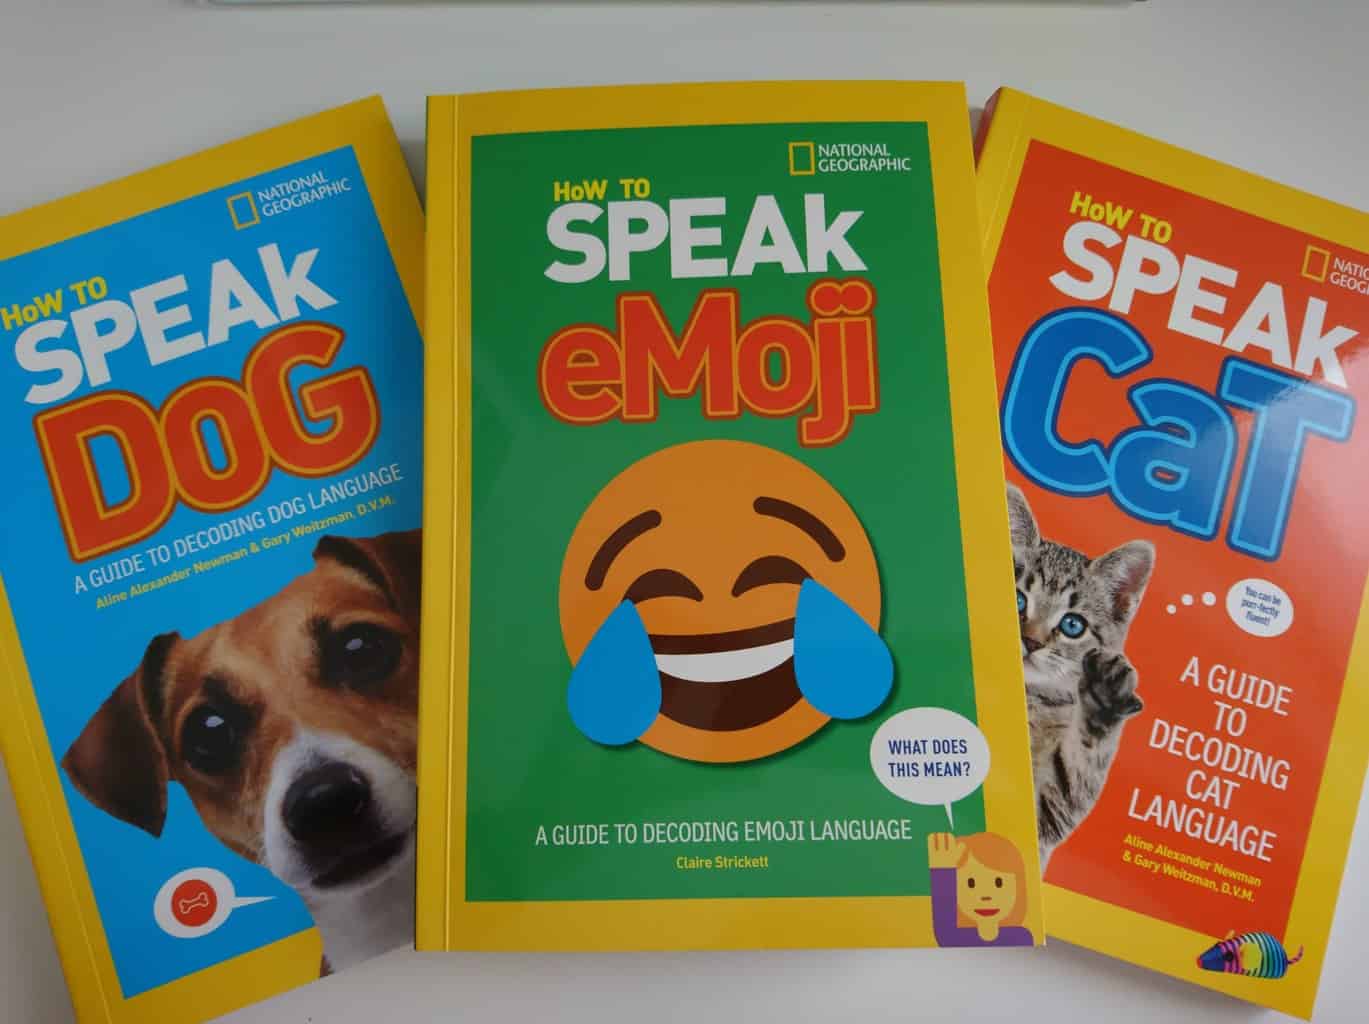 How to speak emoji